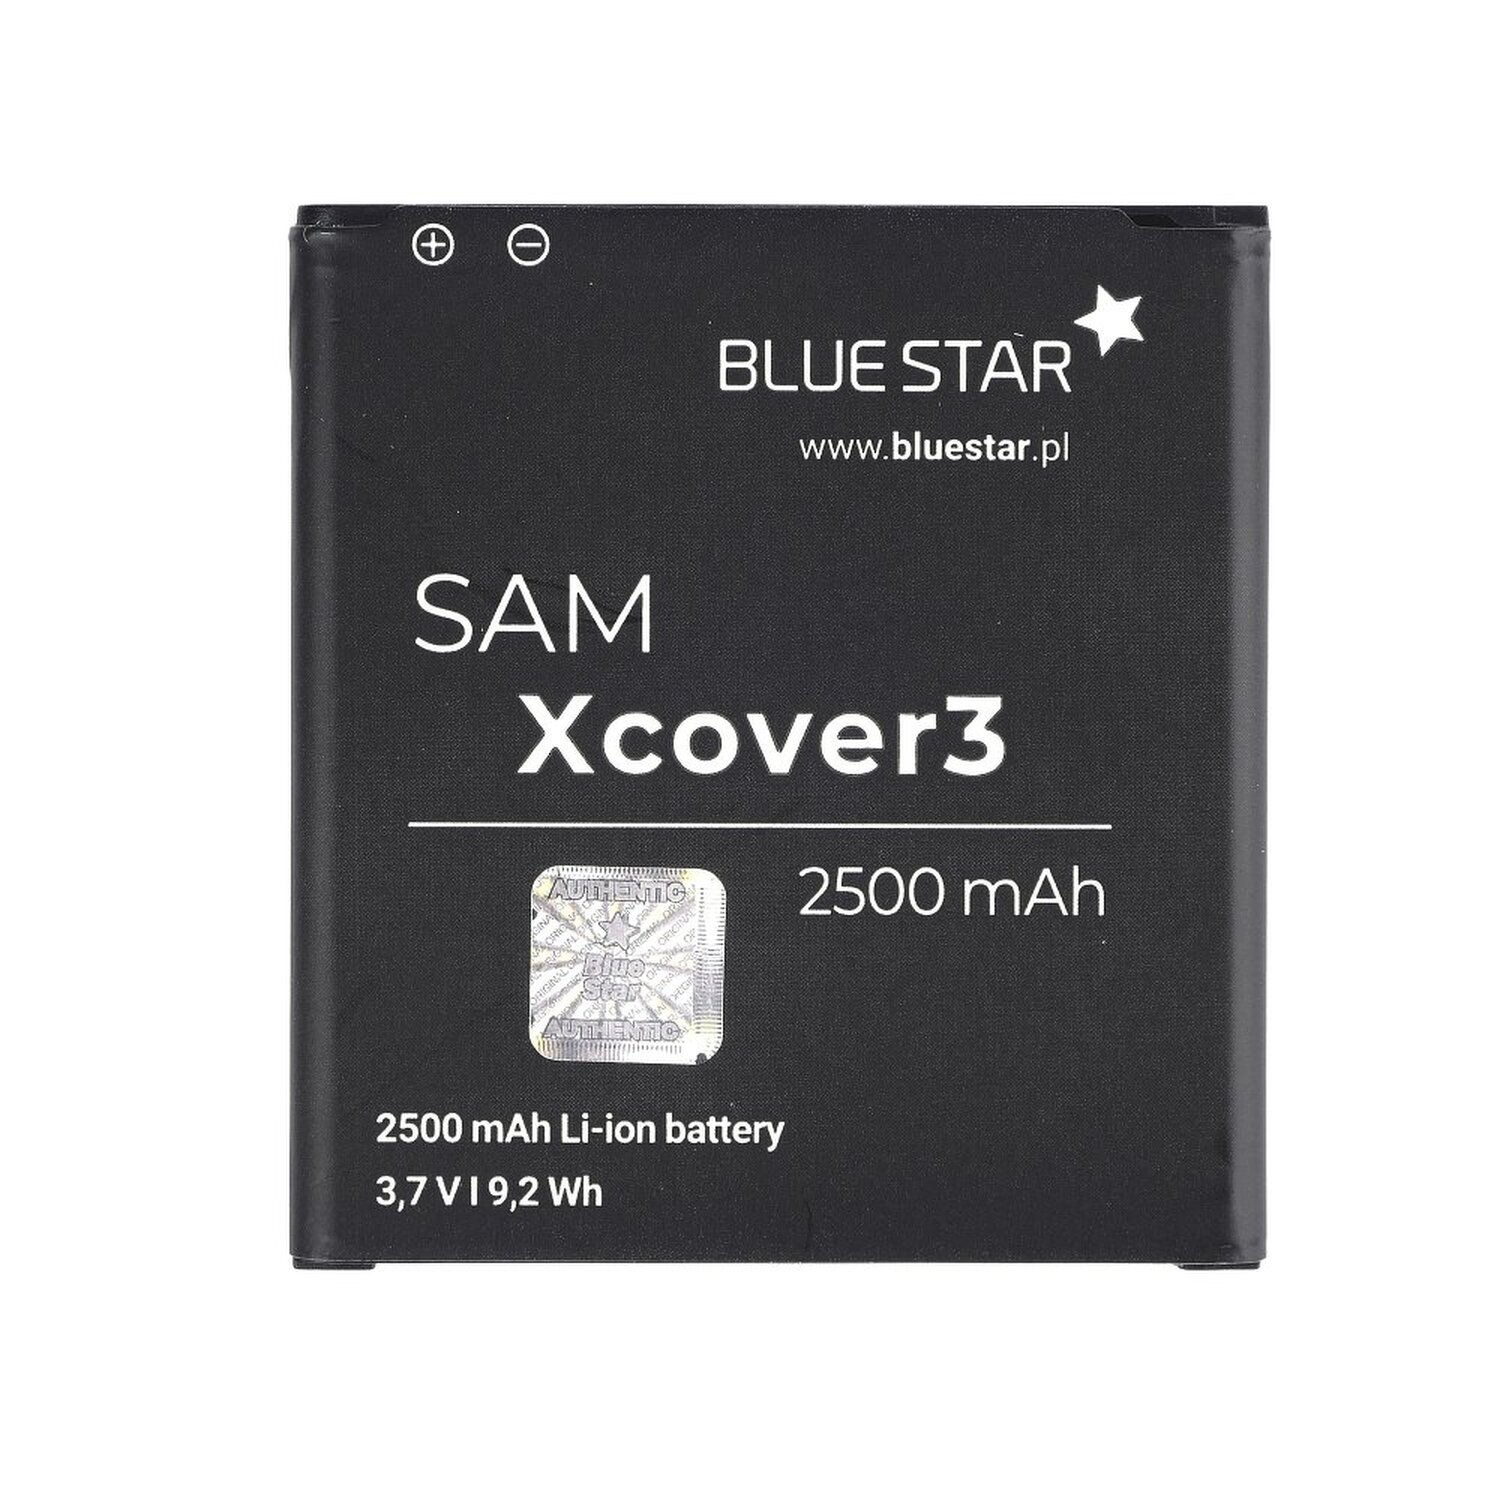 BLUESTAR Akku für Samsung Galaxy 3 Li-Ion Xcover Handyakku